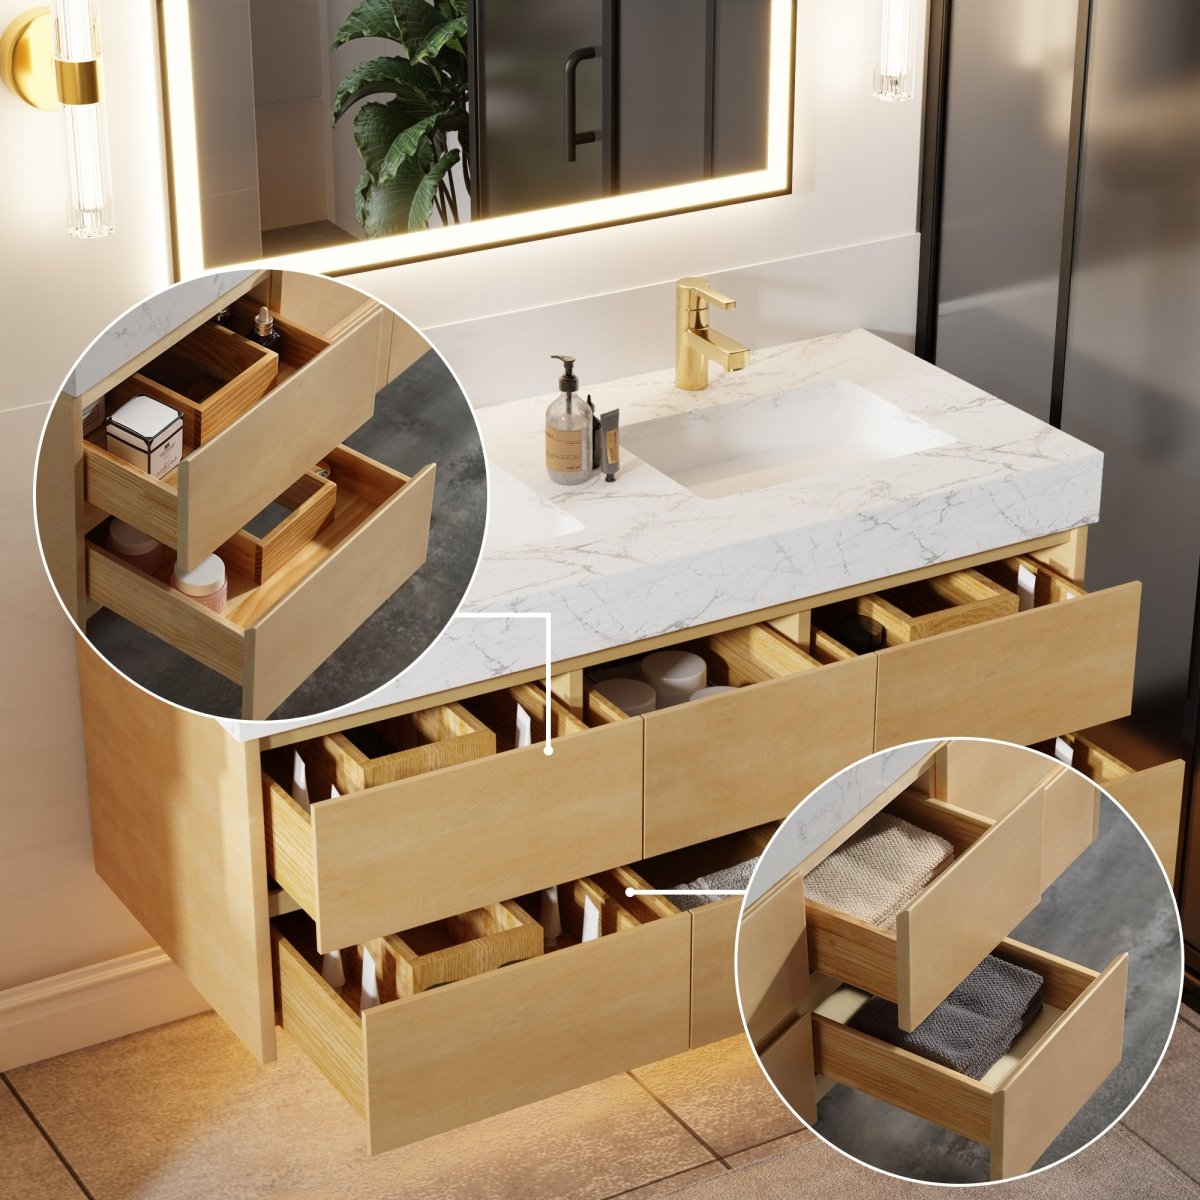 Sleek 48" Modern Floating Maple wood Bathroom Vanity Cabinet with with Lights and Stone Slab Countertop, Dual Sinks